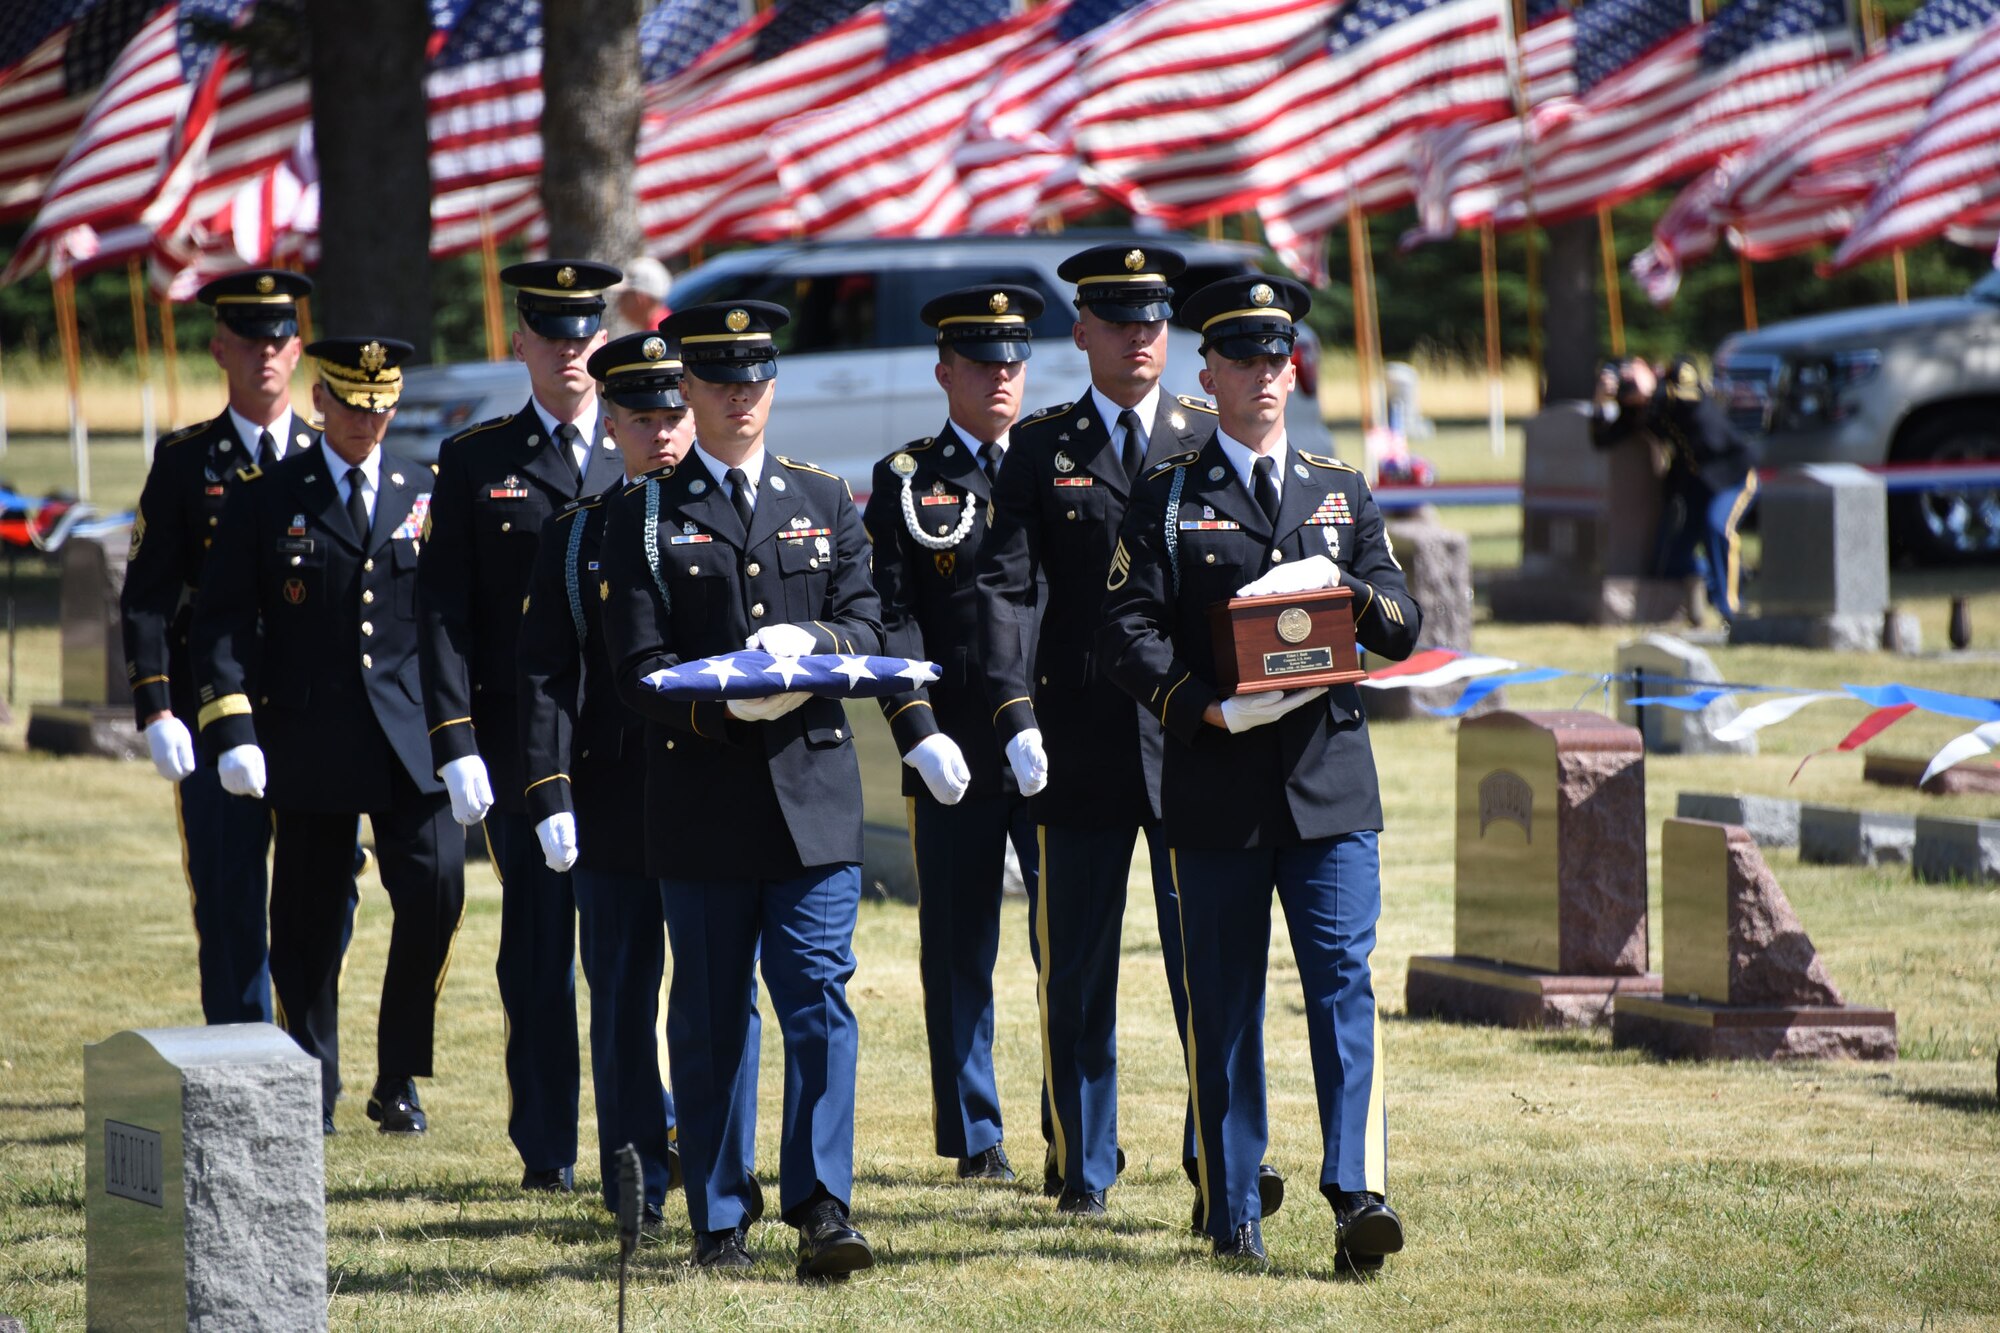 Funeral services of Army Cpl. Eldert J. Beek in George, Iowa on June 14, 2021. Beek was killed in action during the Korean war on December 1, 1950